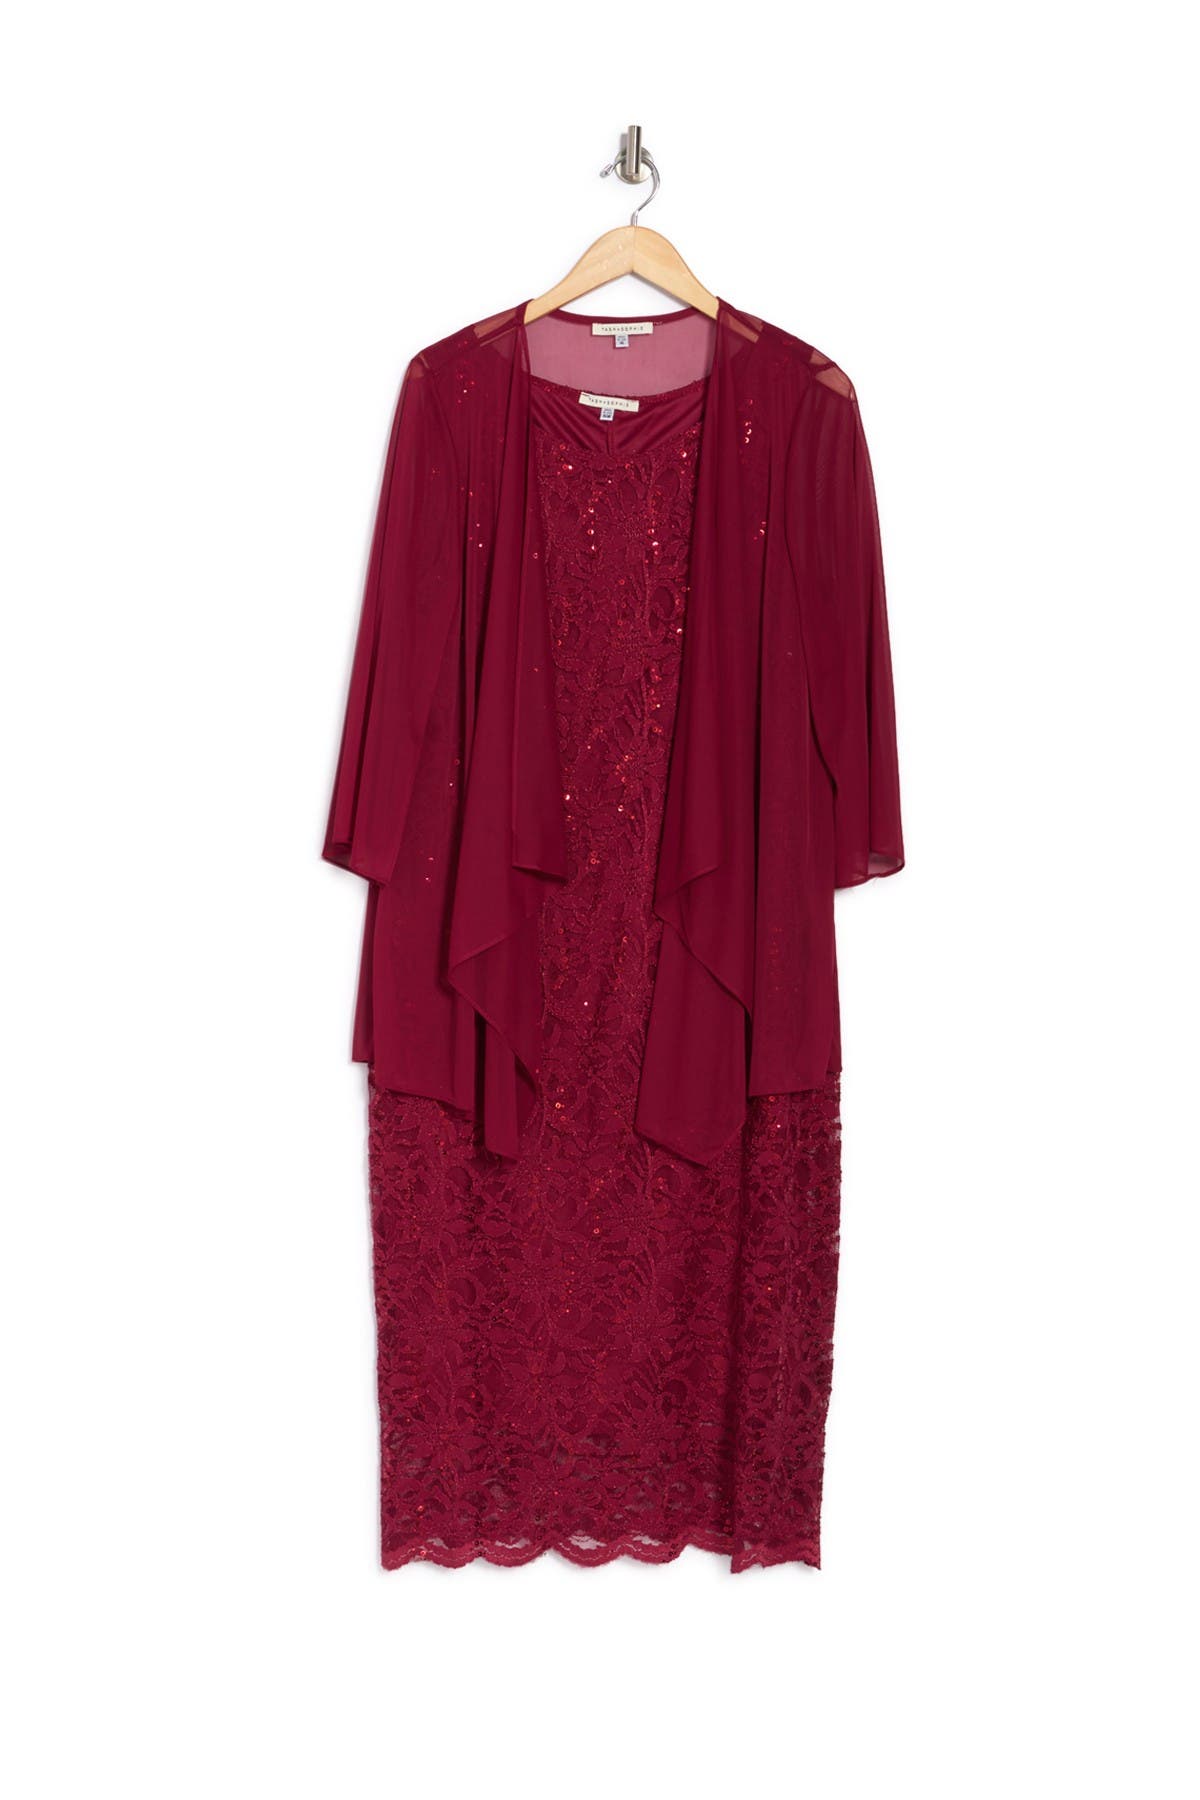 Tash + Sophie Sequin Lace Midi Dress & Mesh Jacket Overlay 2-piece Set In Dark Red3